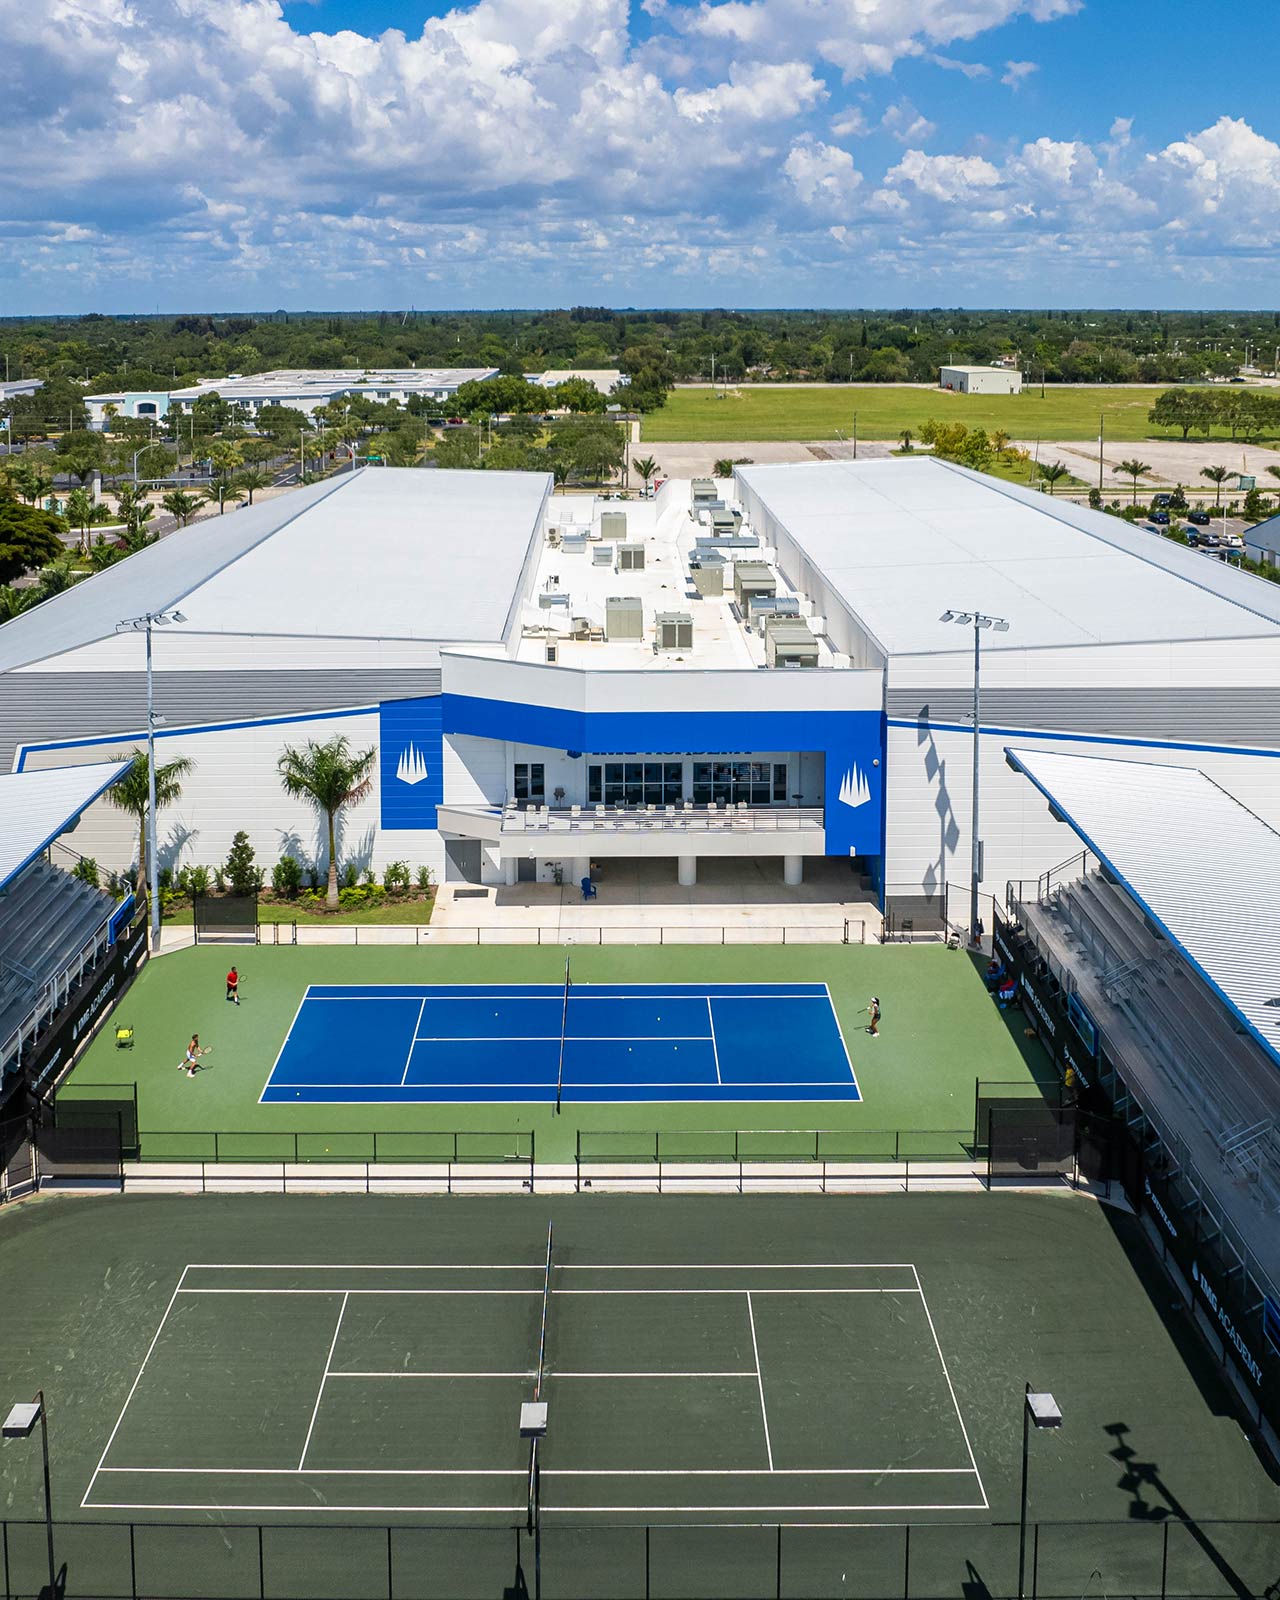 tennis-camp-facilities-o-4